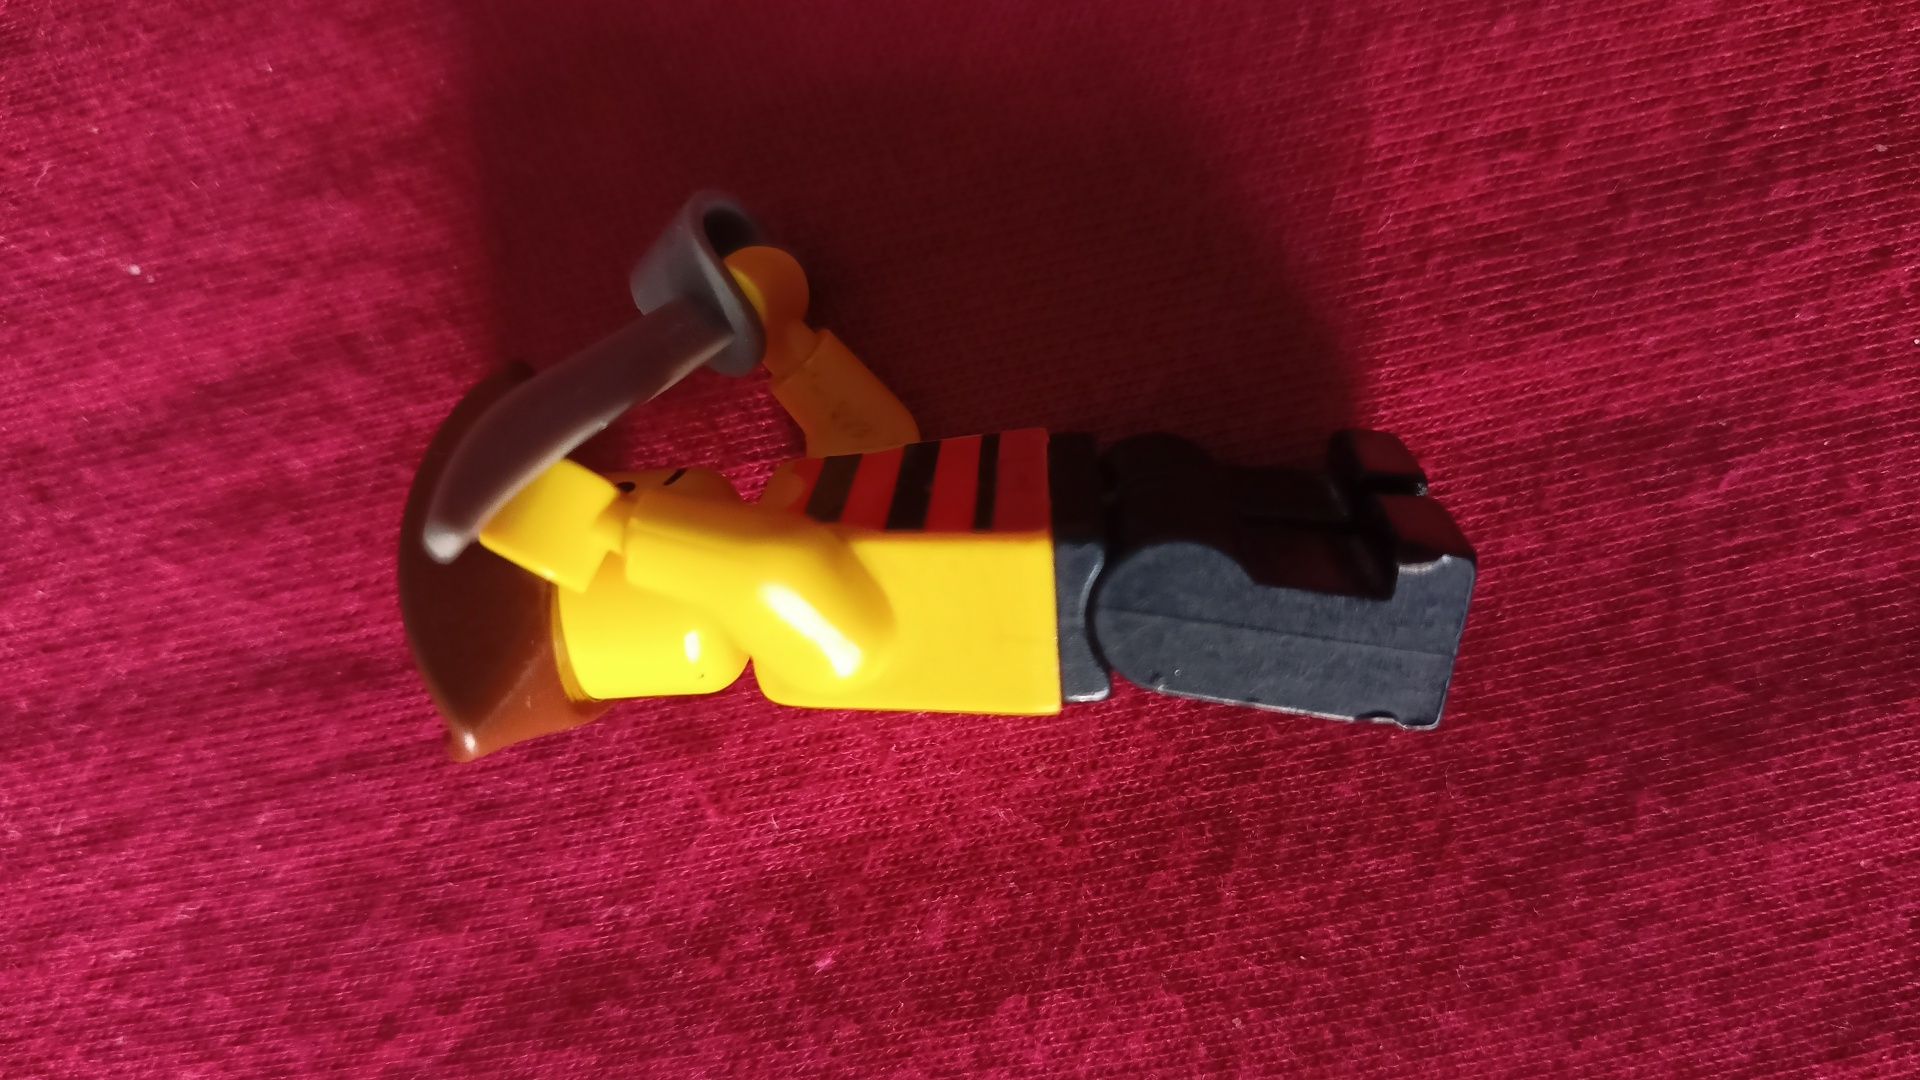 LEGO Pirat figurka minifig Szabla Kapelusz (Piraci, Pirates)